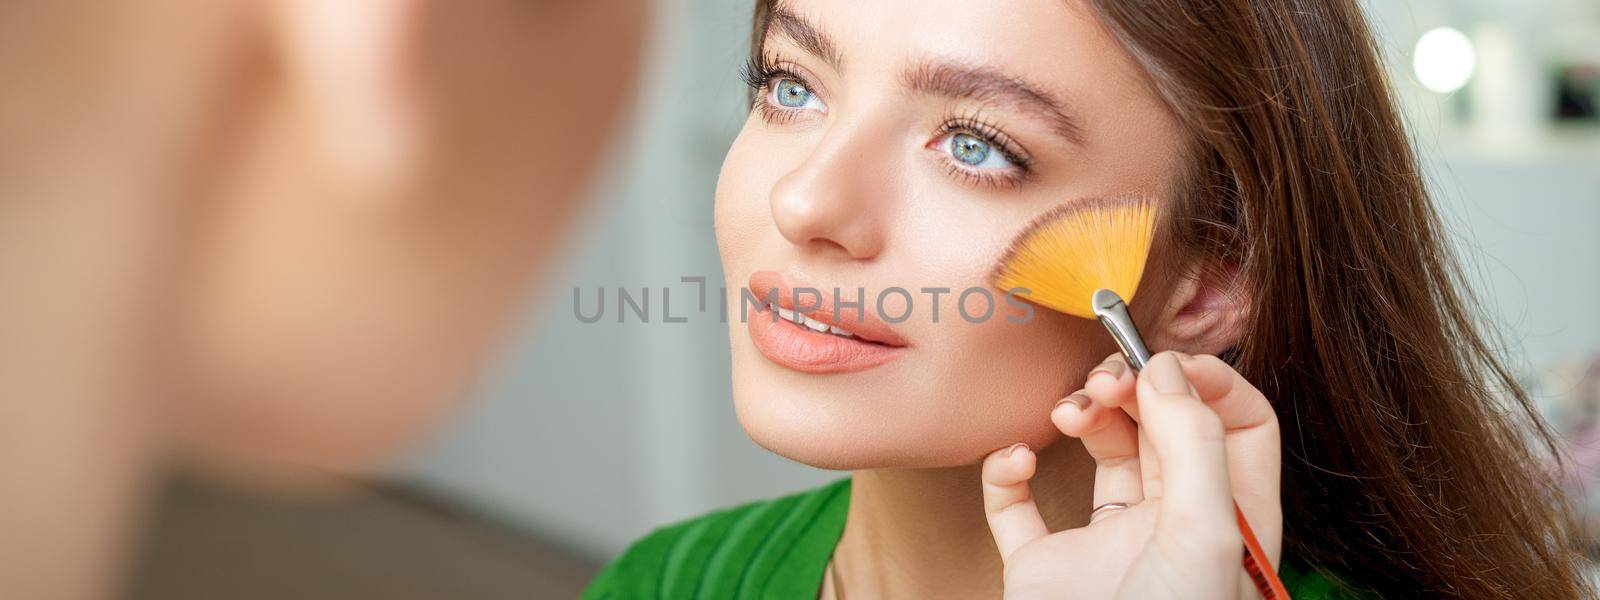 Professional make up artist applying powder by okskukuruza